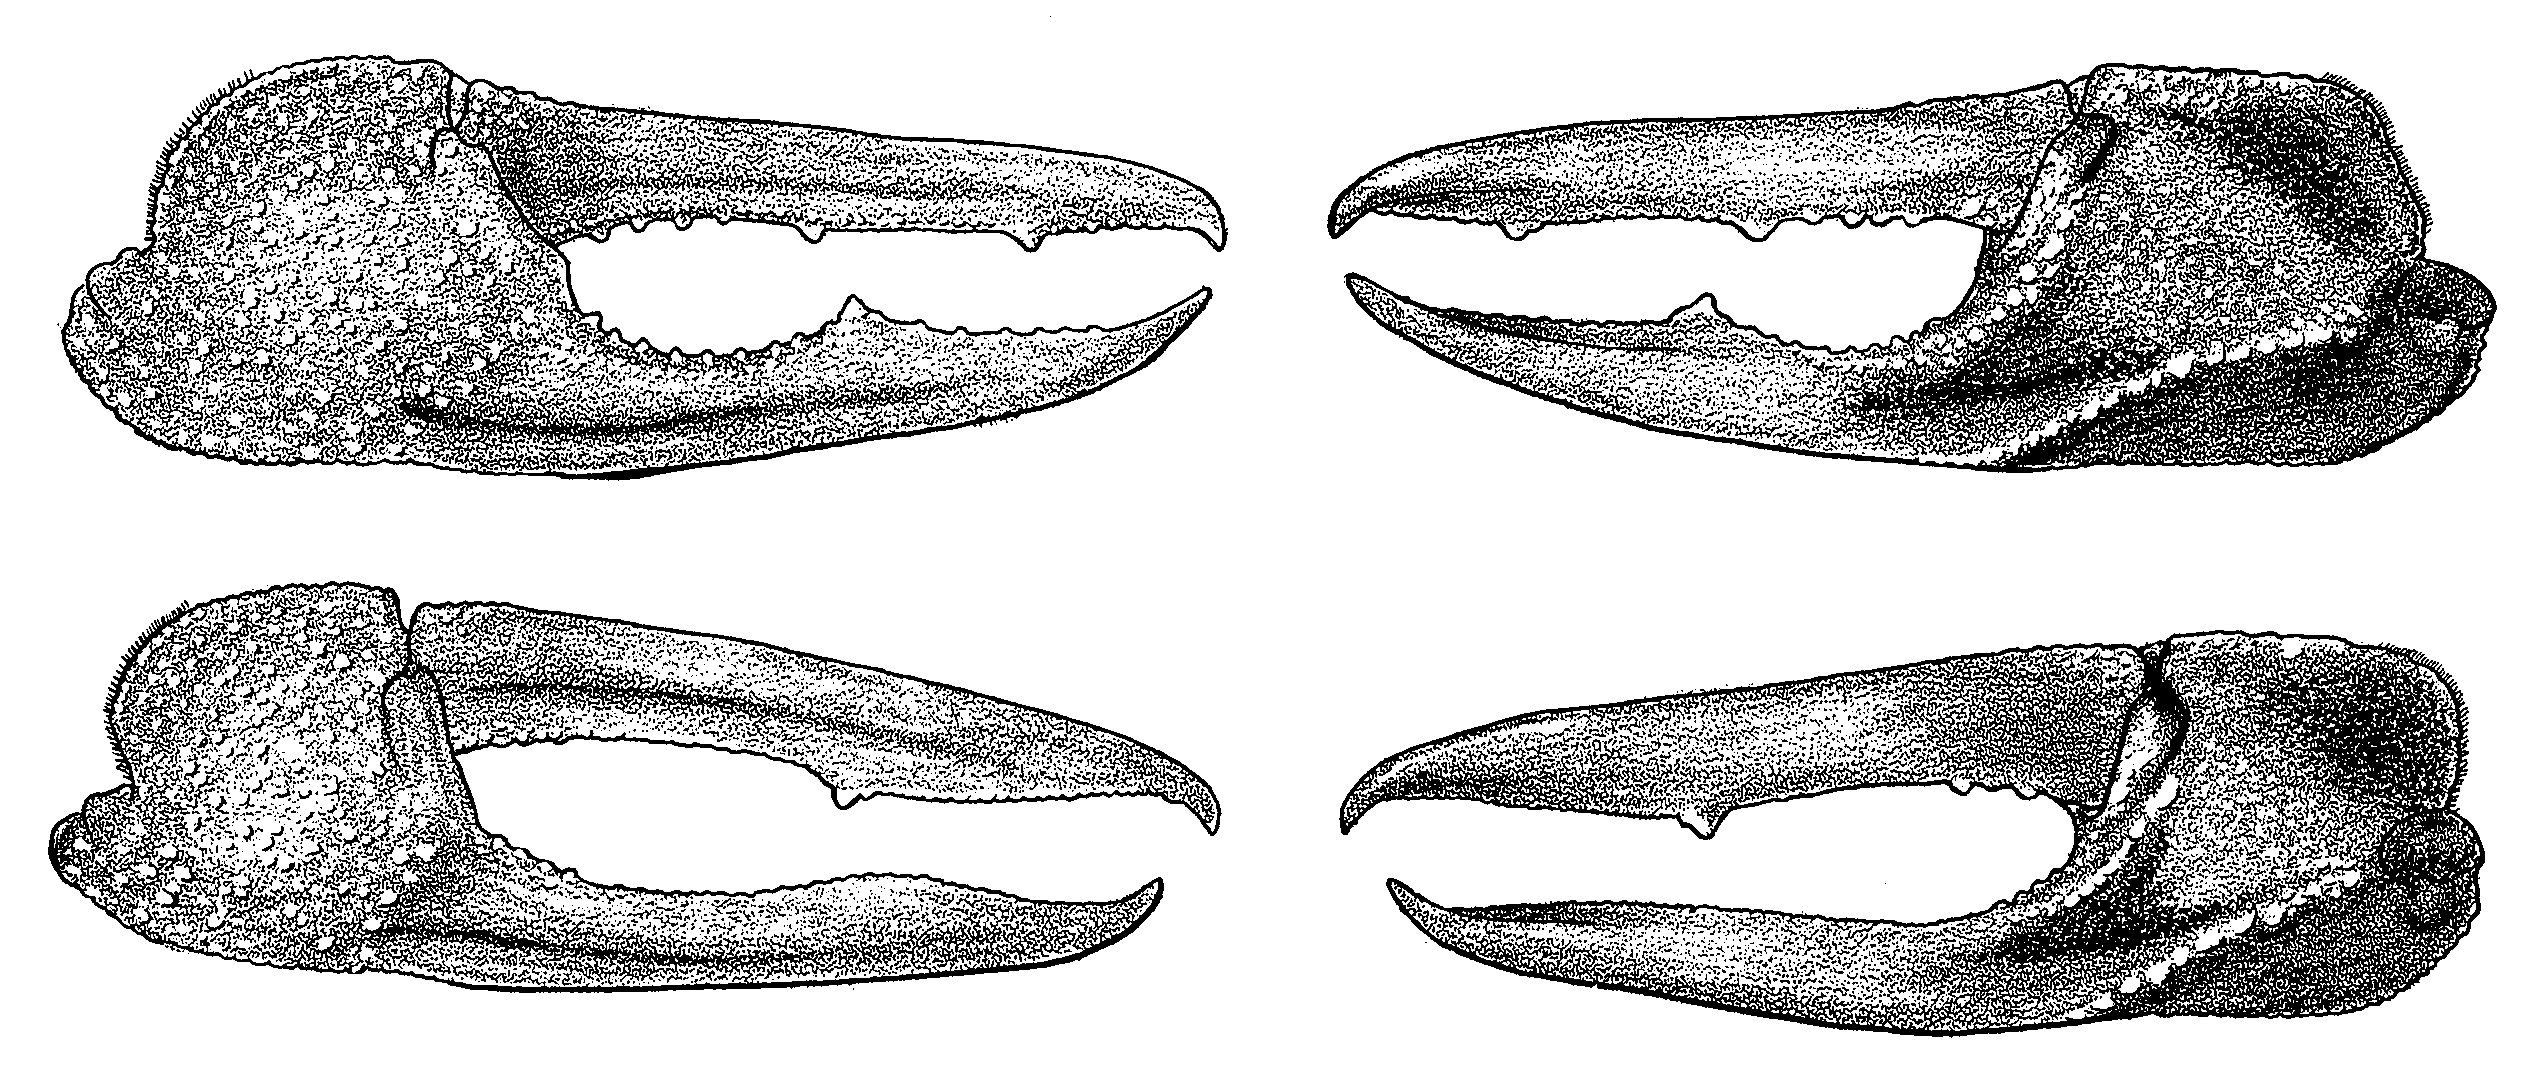 Uca coarctata flammula: Crane (1975) image